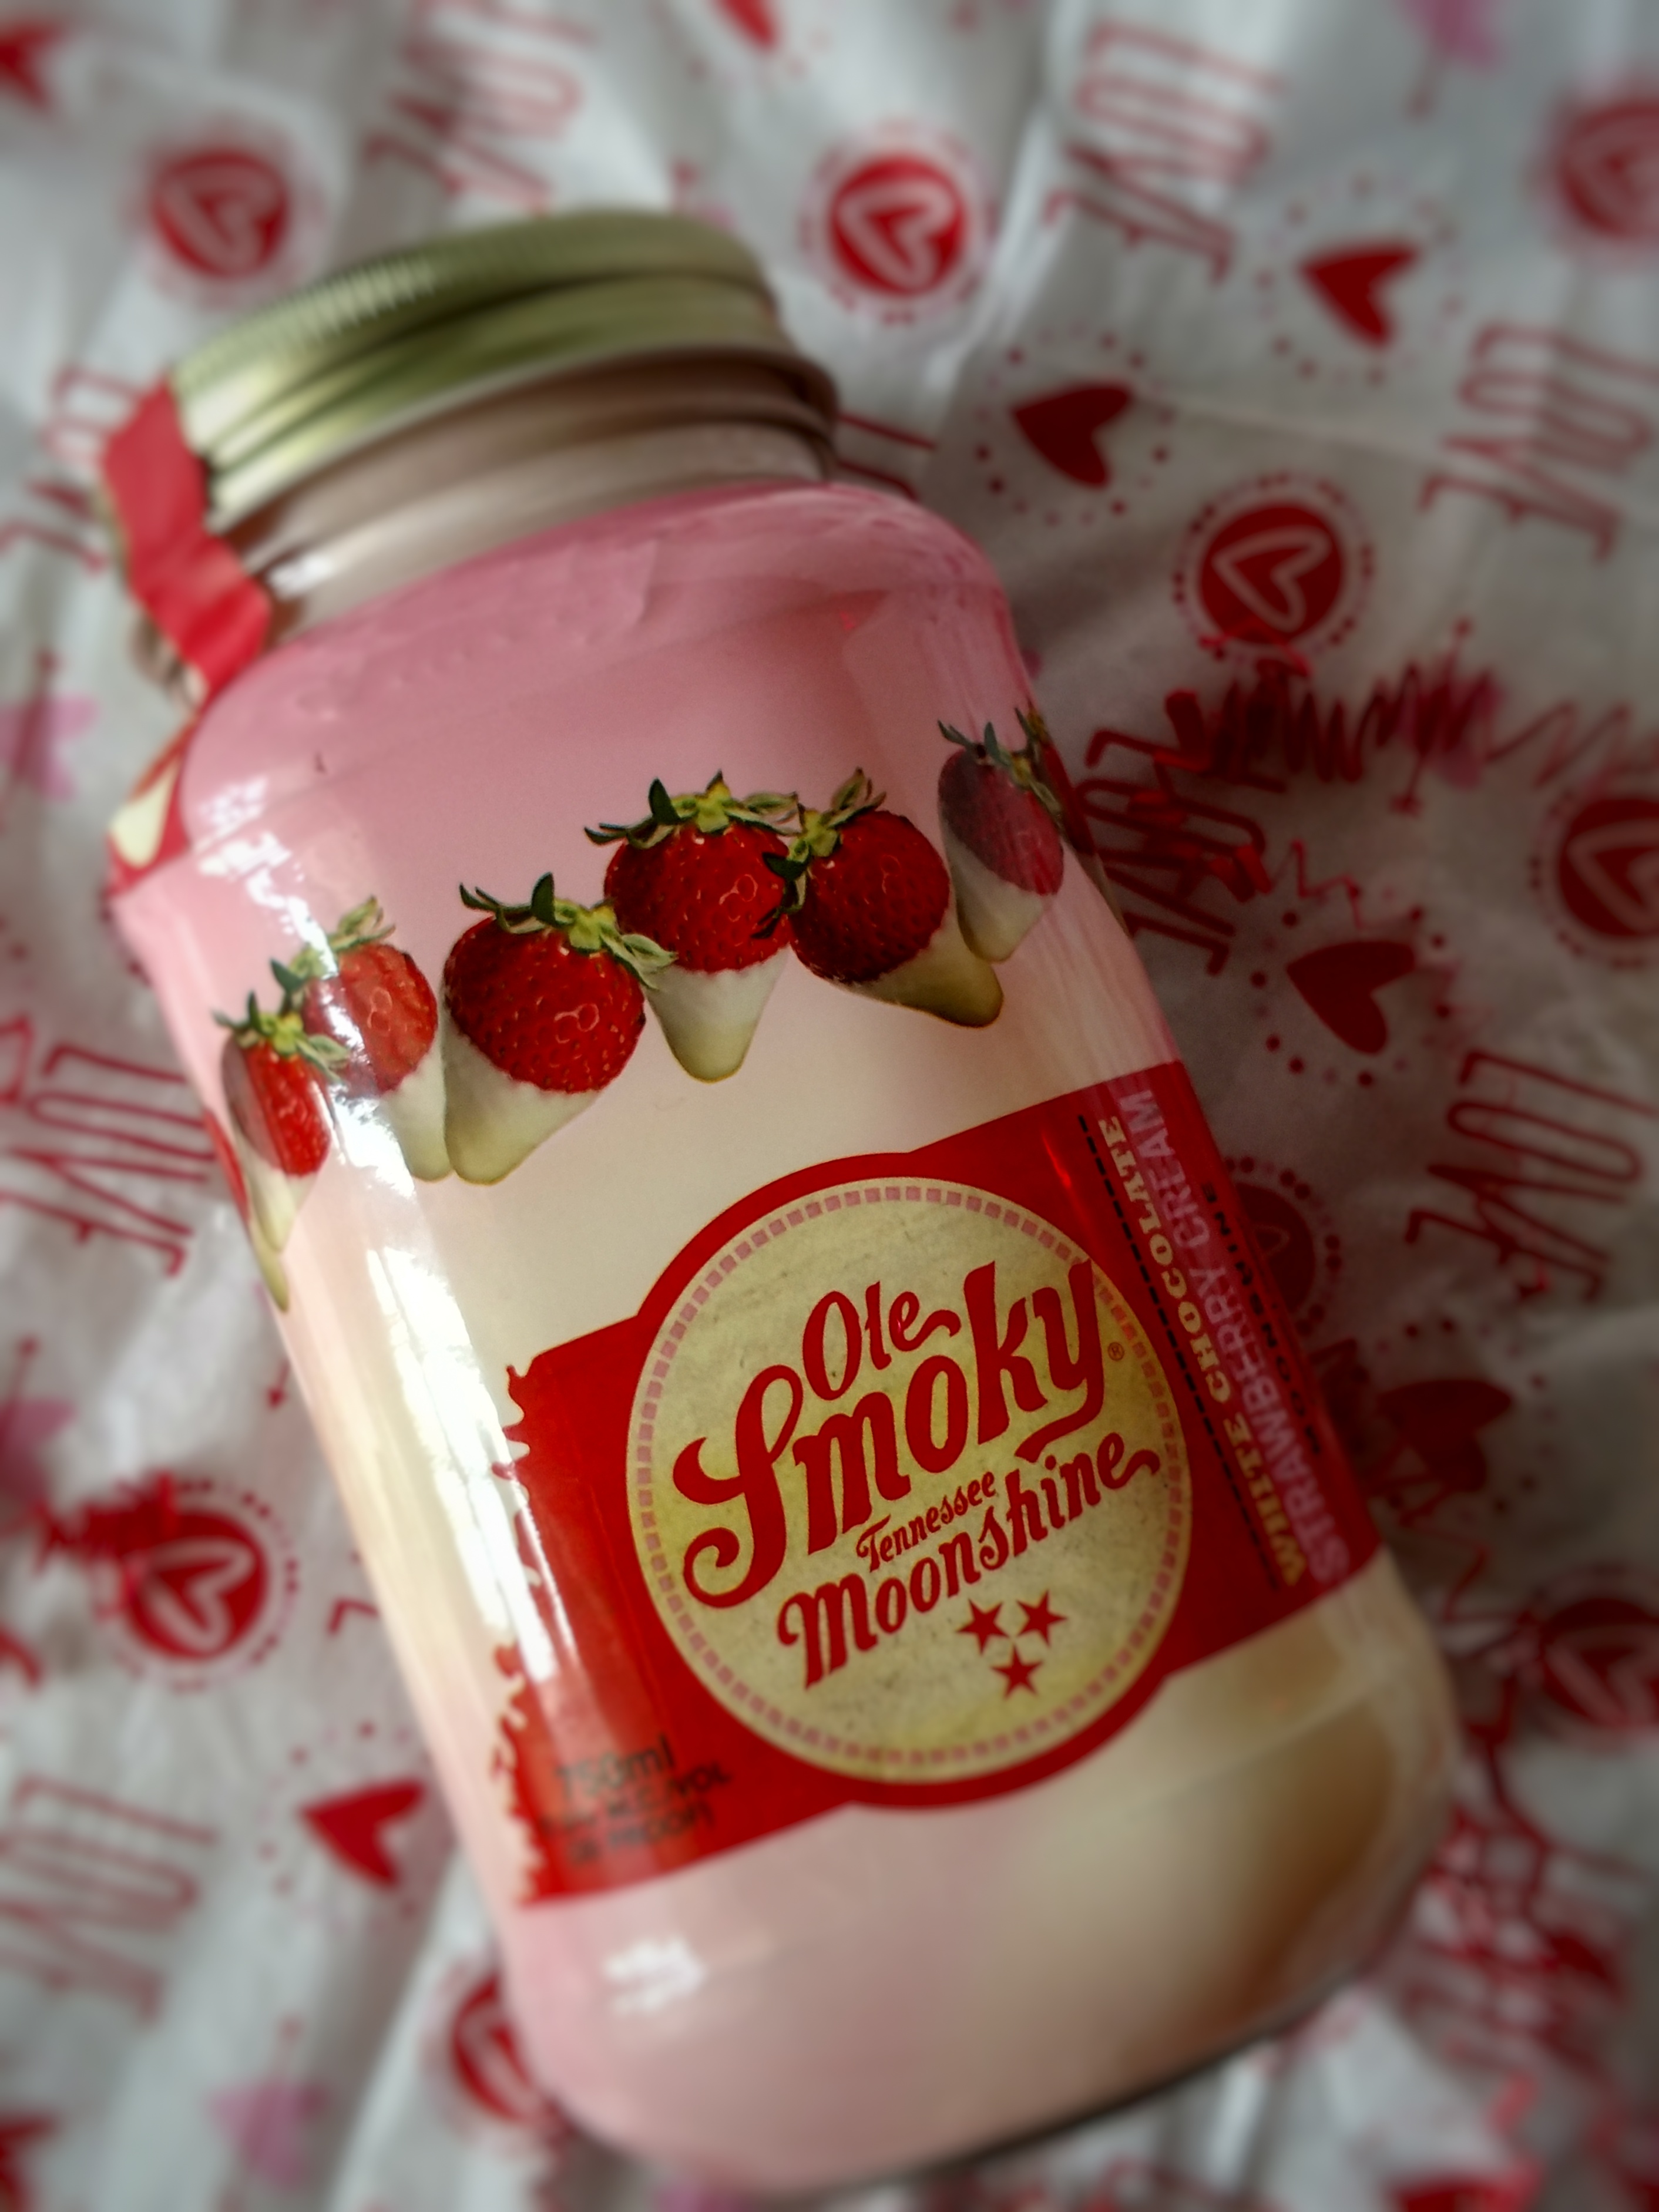 Ole Smoky Tennessee Strawberries & Cream